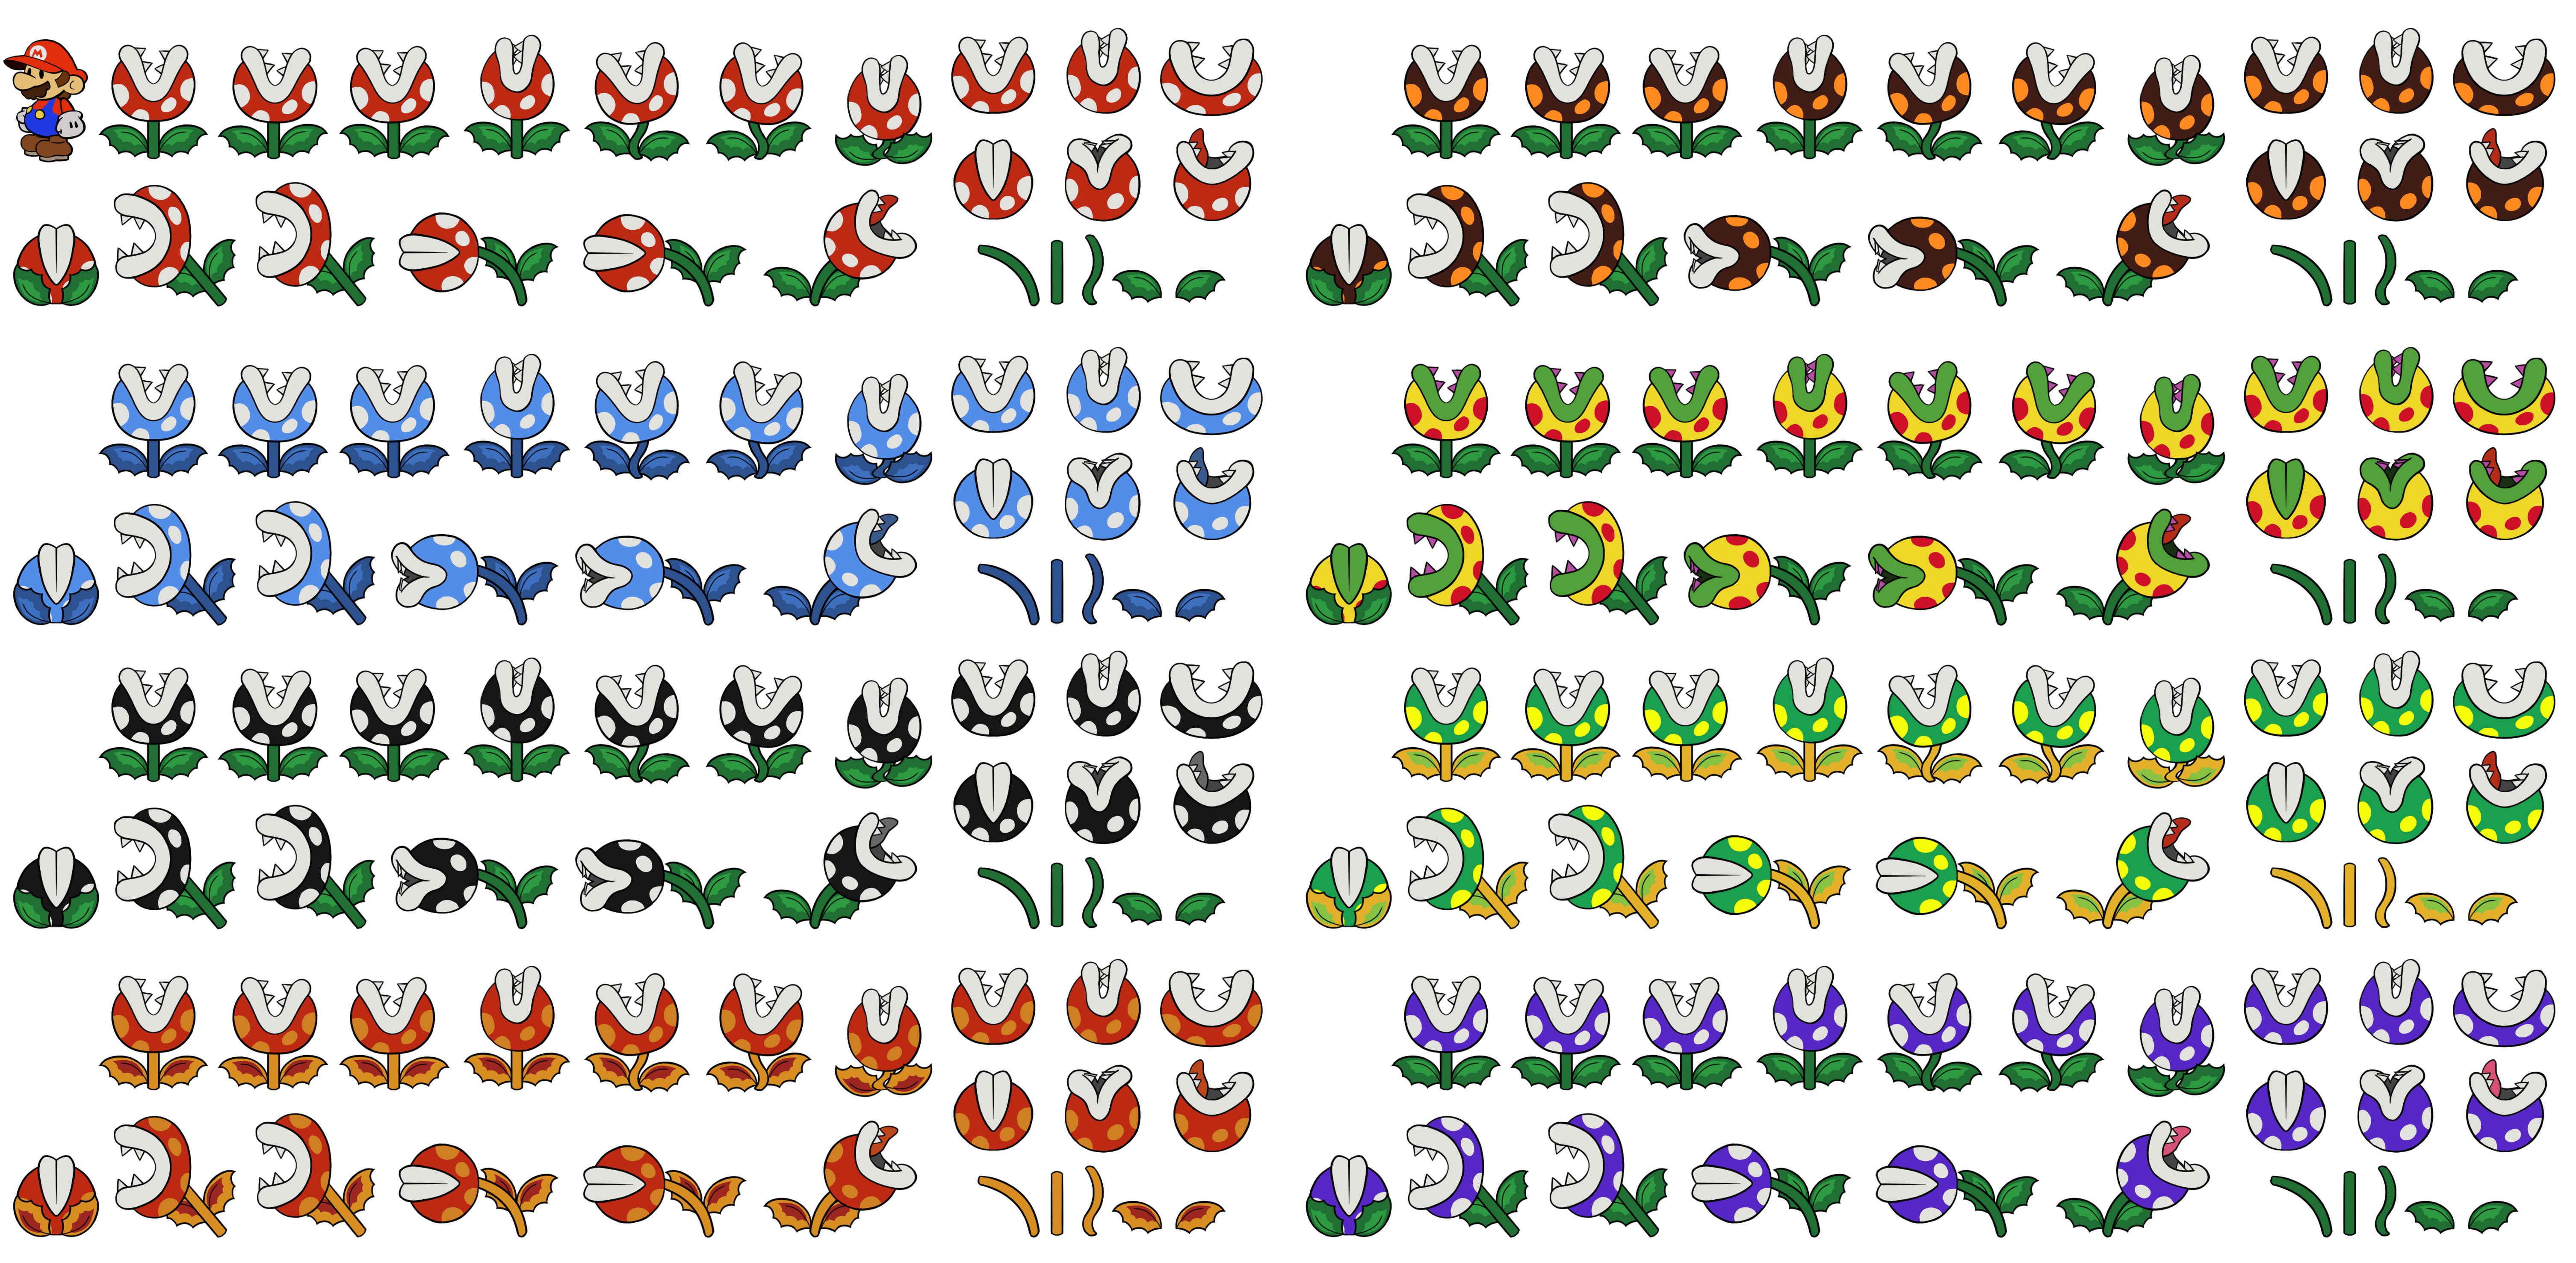 Mario Customs - Piranha Plants (Paper Mario-Style, Modern)